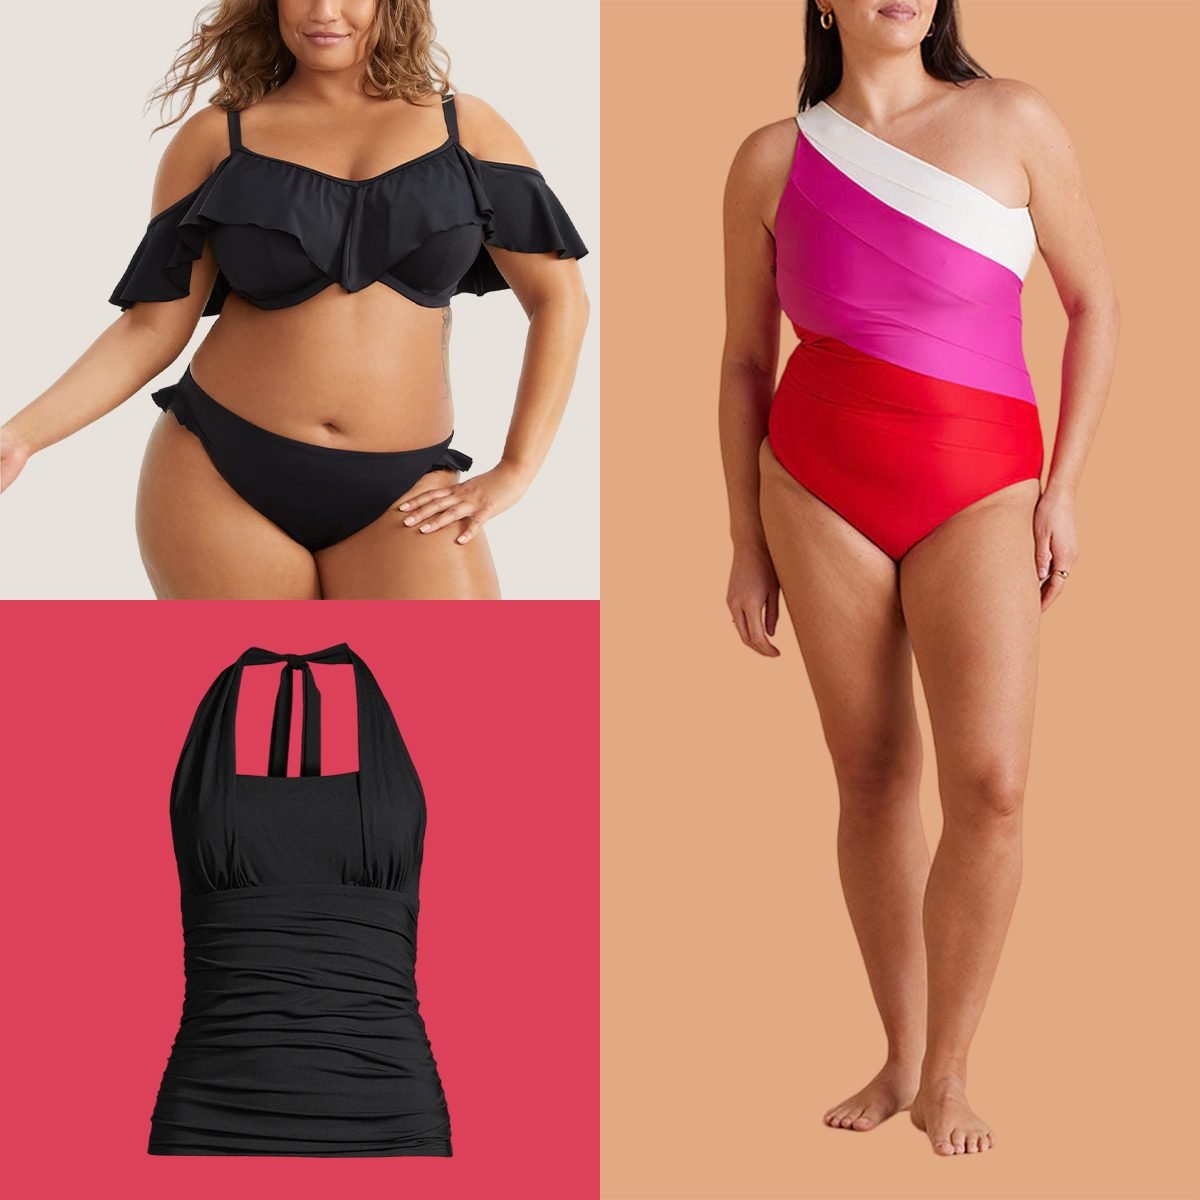 How to Choose Flattering Plus Size Swimwear